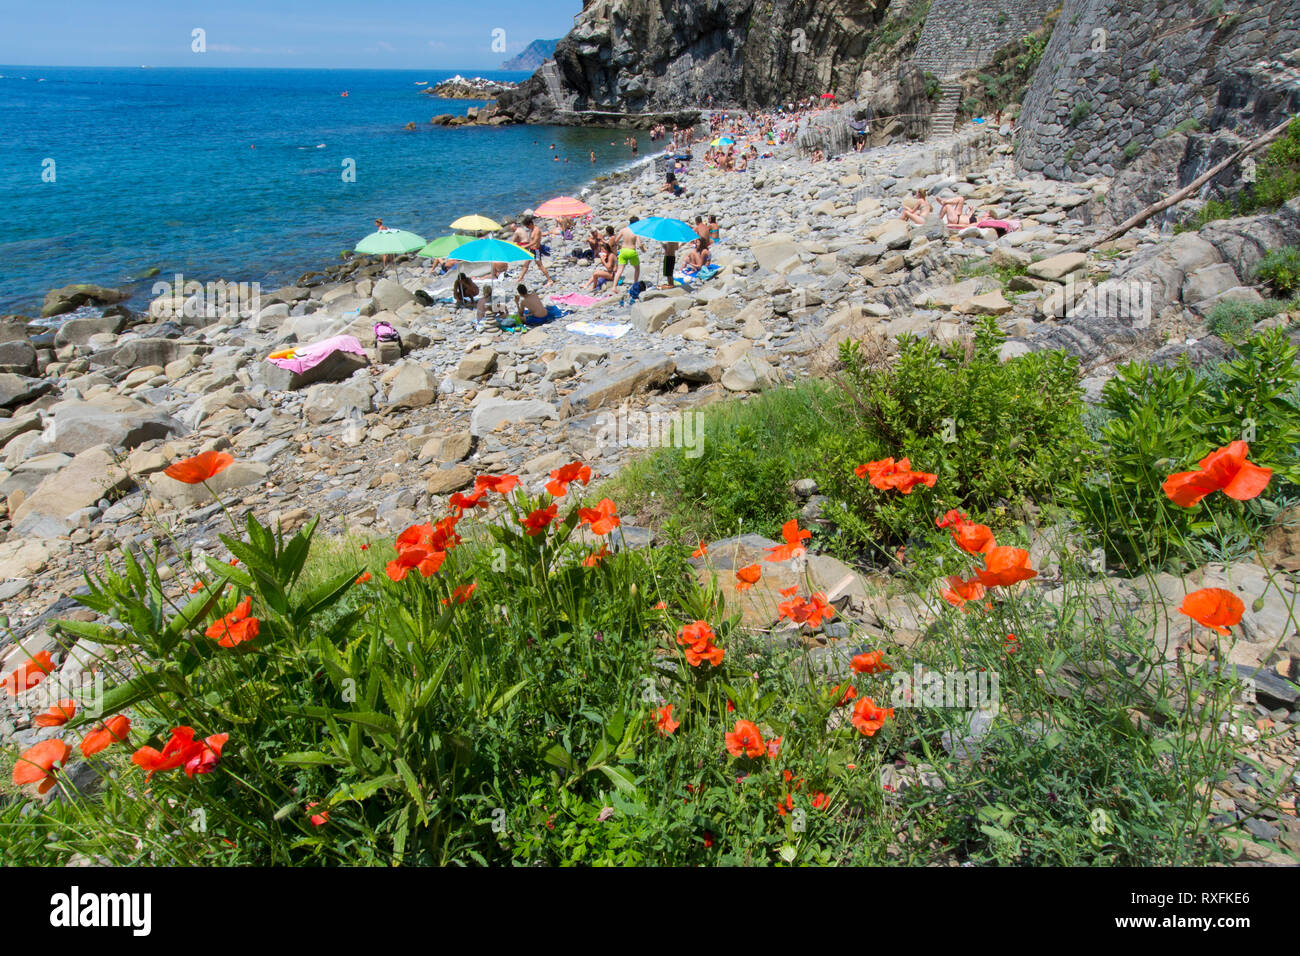 Beach at Riomaggiore, a village and comune in the province of La Spezia, situated in a small valley in the Liguria region of Italy Stock Photo